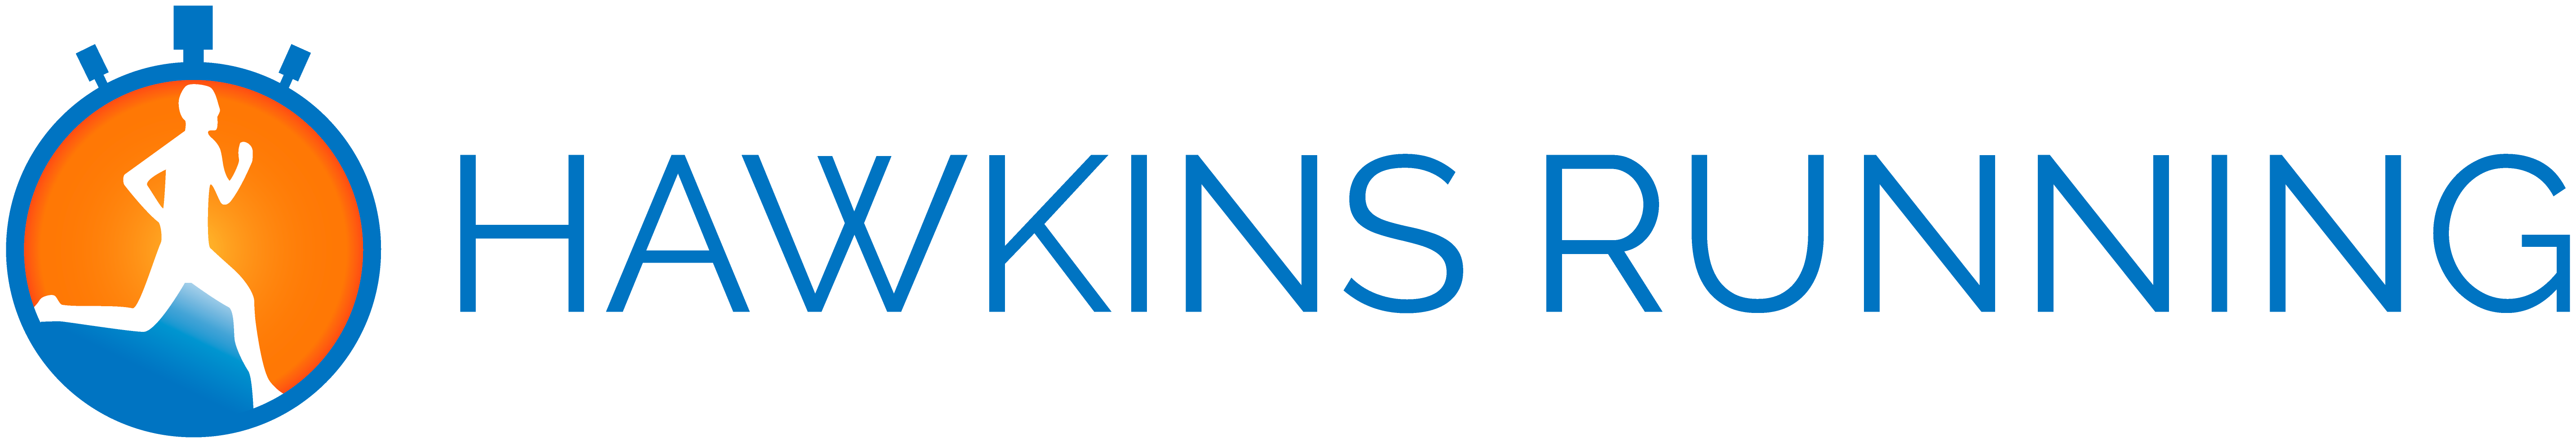 Hawkins Running logo